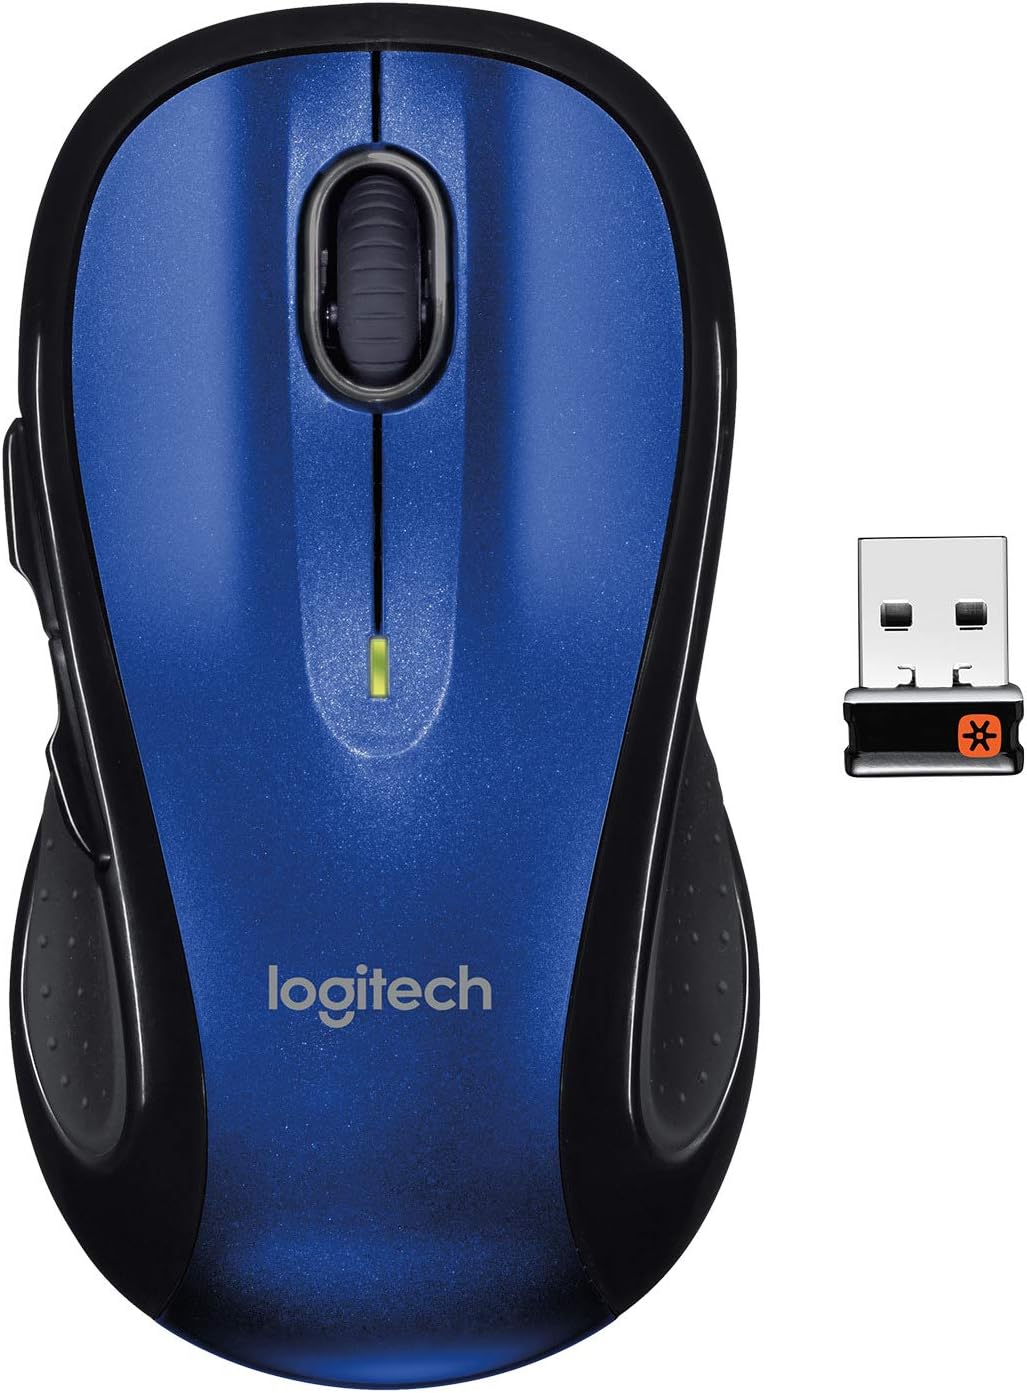 Study of Logitech M510 Wireless Computer Mouse